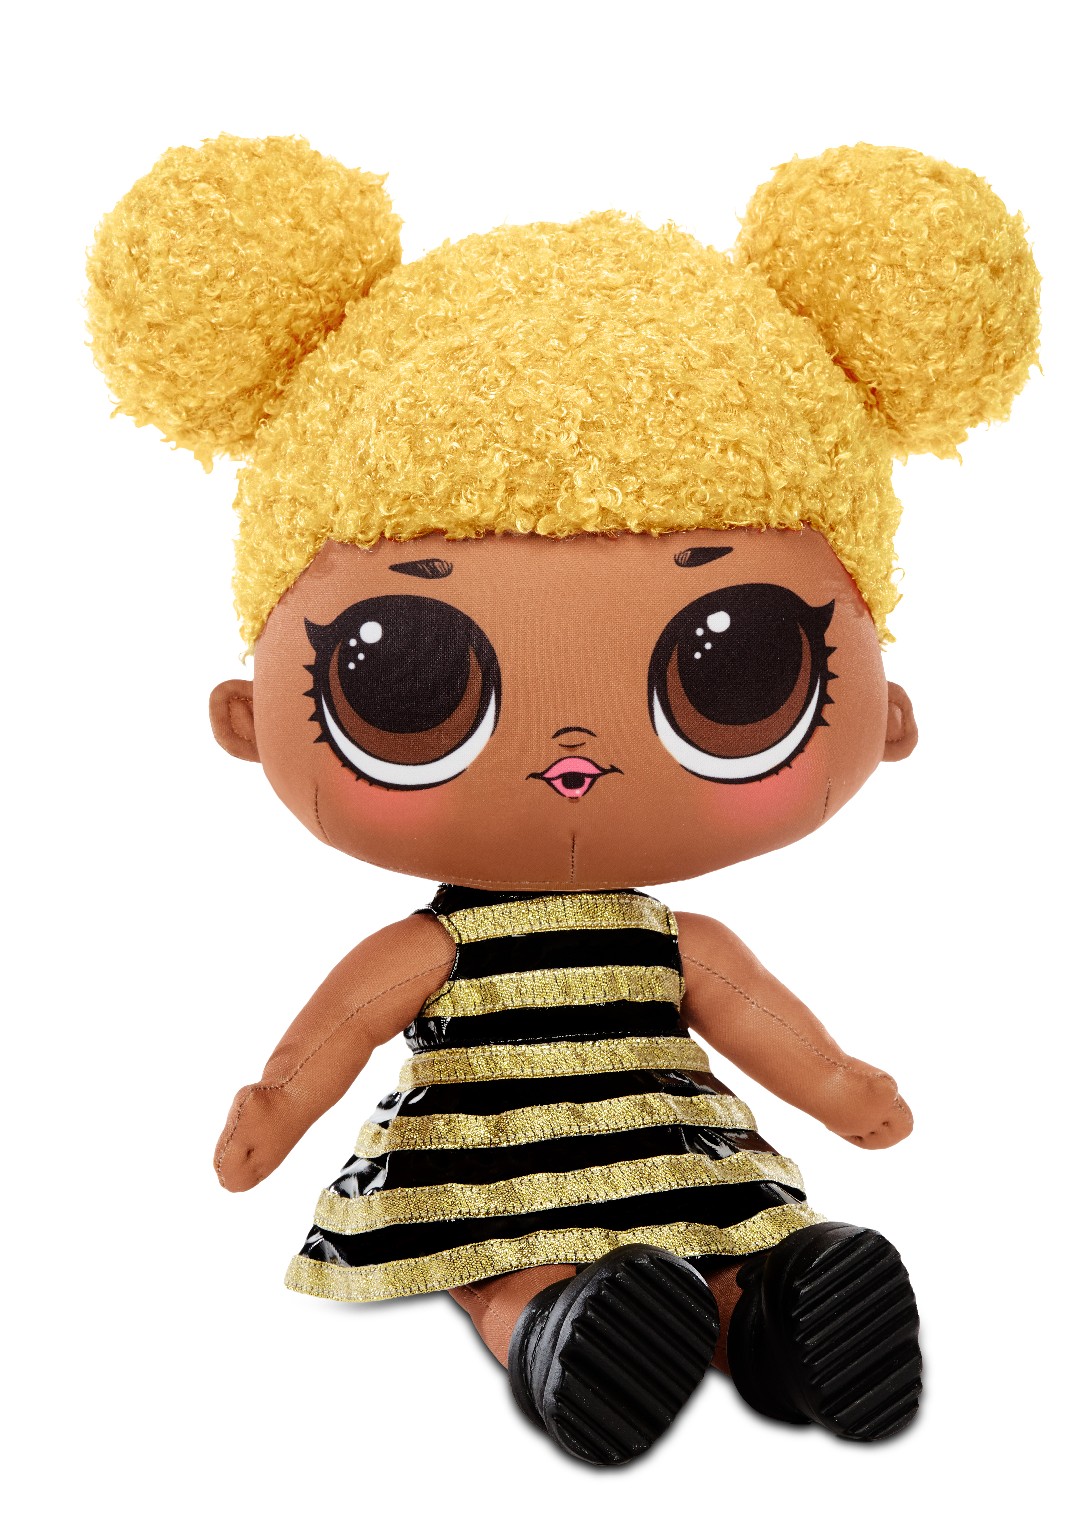 L.O.L. Surprise! Plyšová bábika - Queen Bee